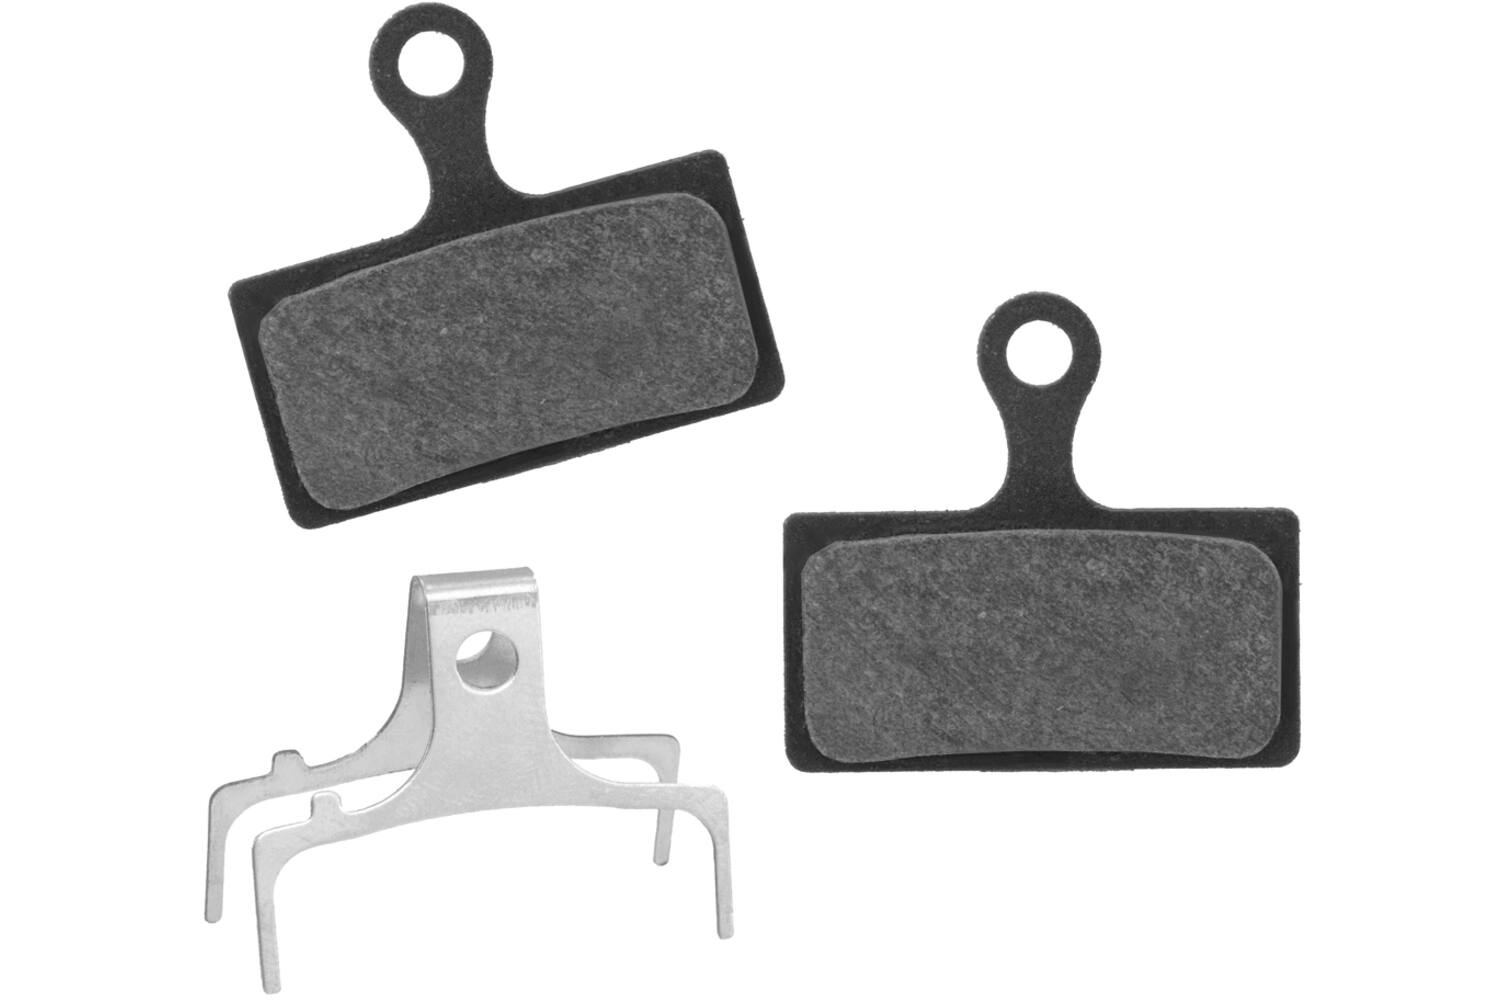 Trivio - remblokjes fiets disc brake pads compatible met shimano xt/xtr >2011 - sintered